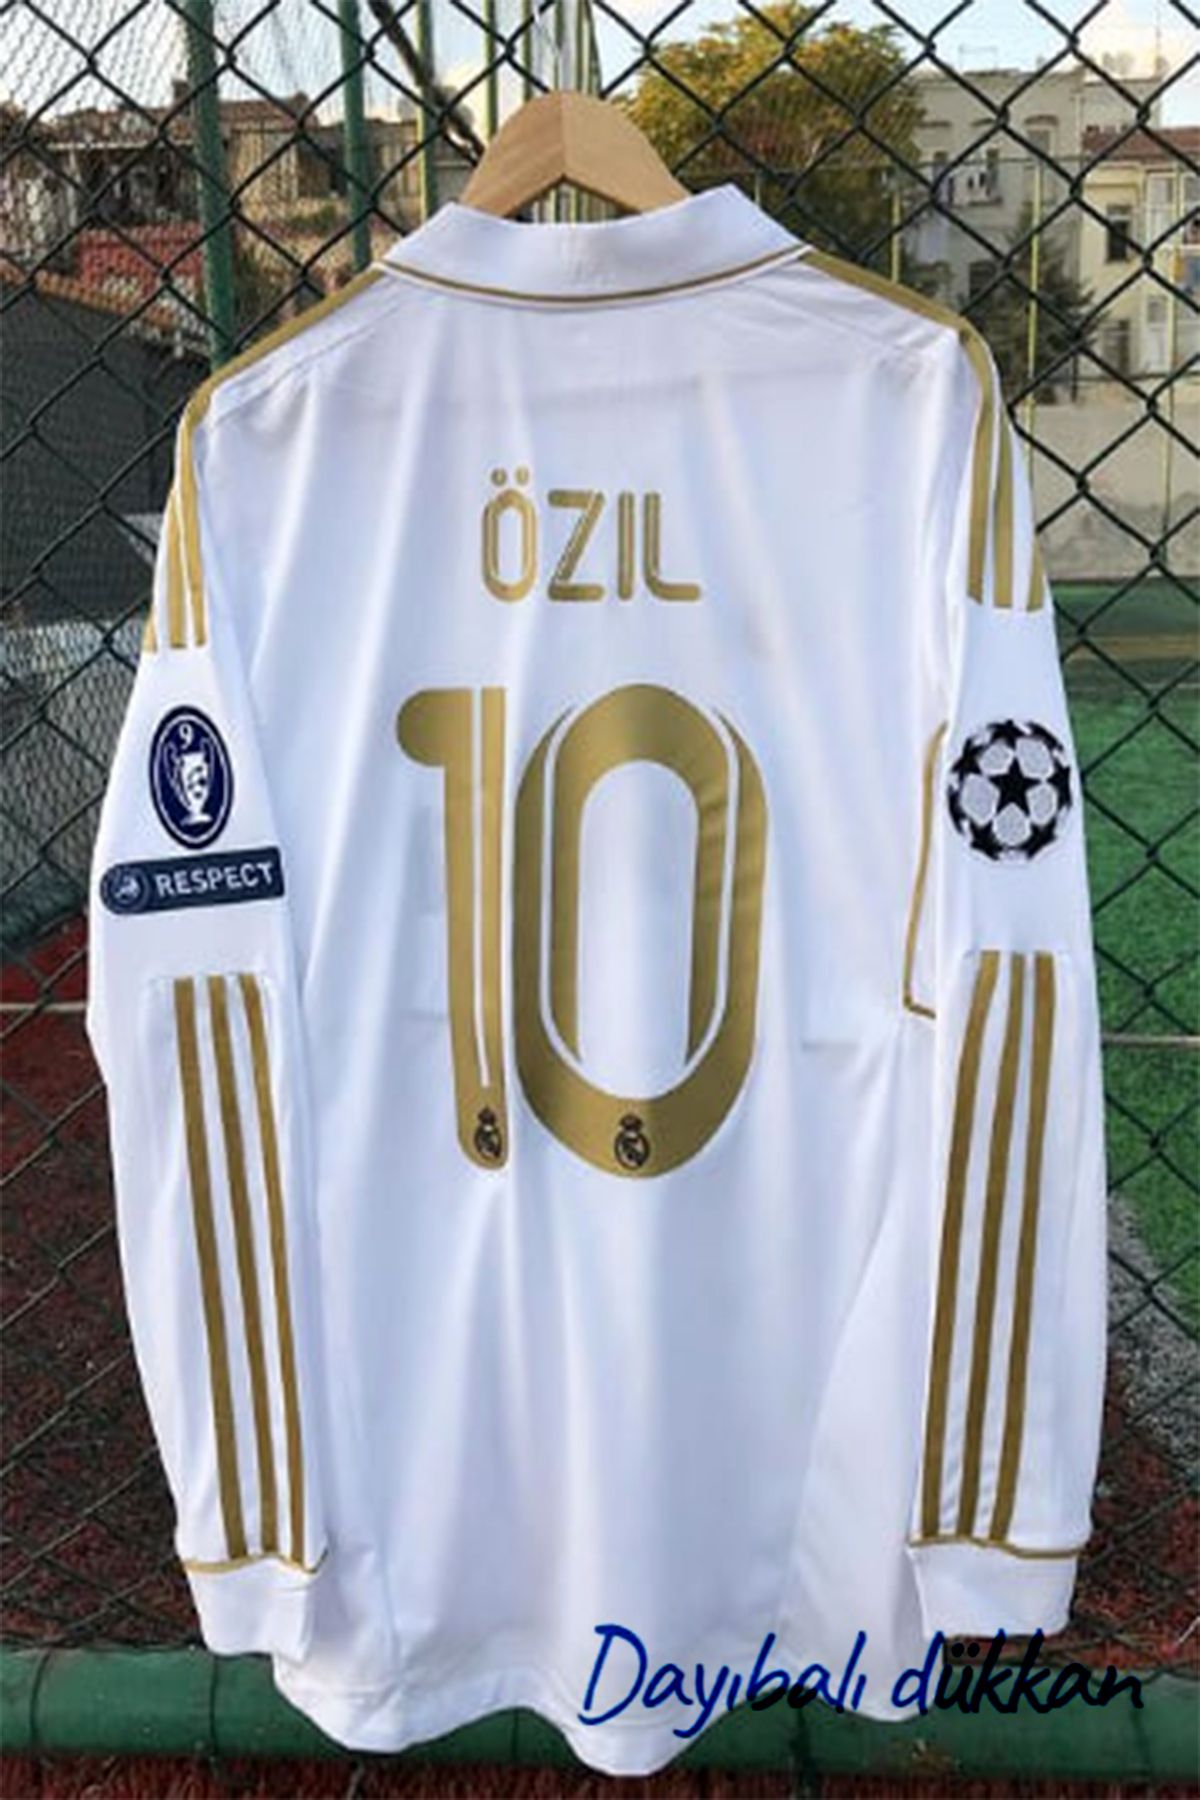 DAYIBALI DÜKKAN Dayıbalı Real Madrid Mesut Ozil 2011/12 Şampiyonlar Ligi Forması